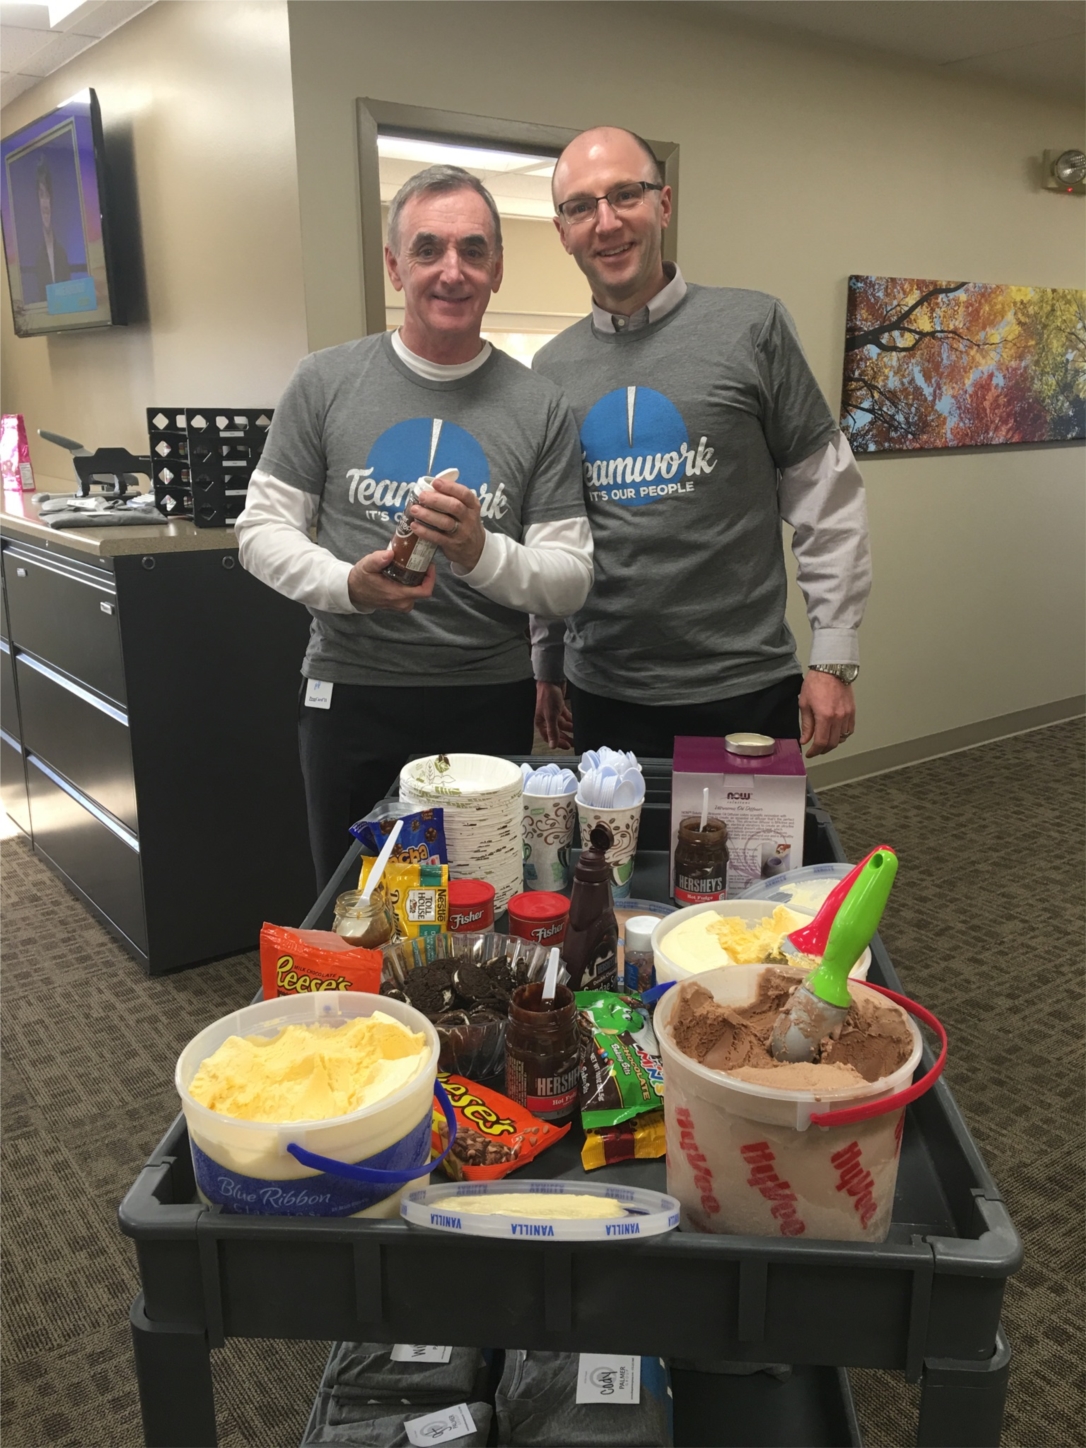 Austin Palmer  / David Leto serving their employees ice cream sundaes and teamwork t-shirts.